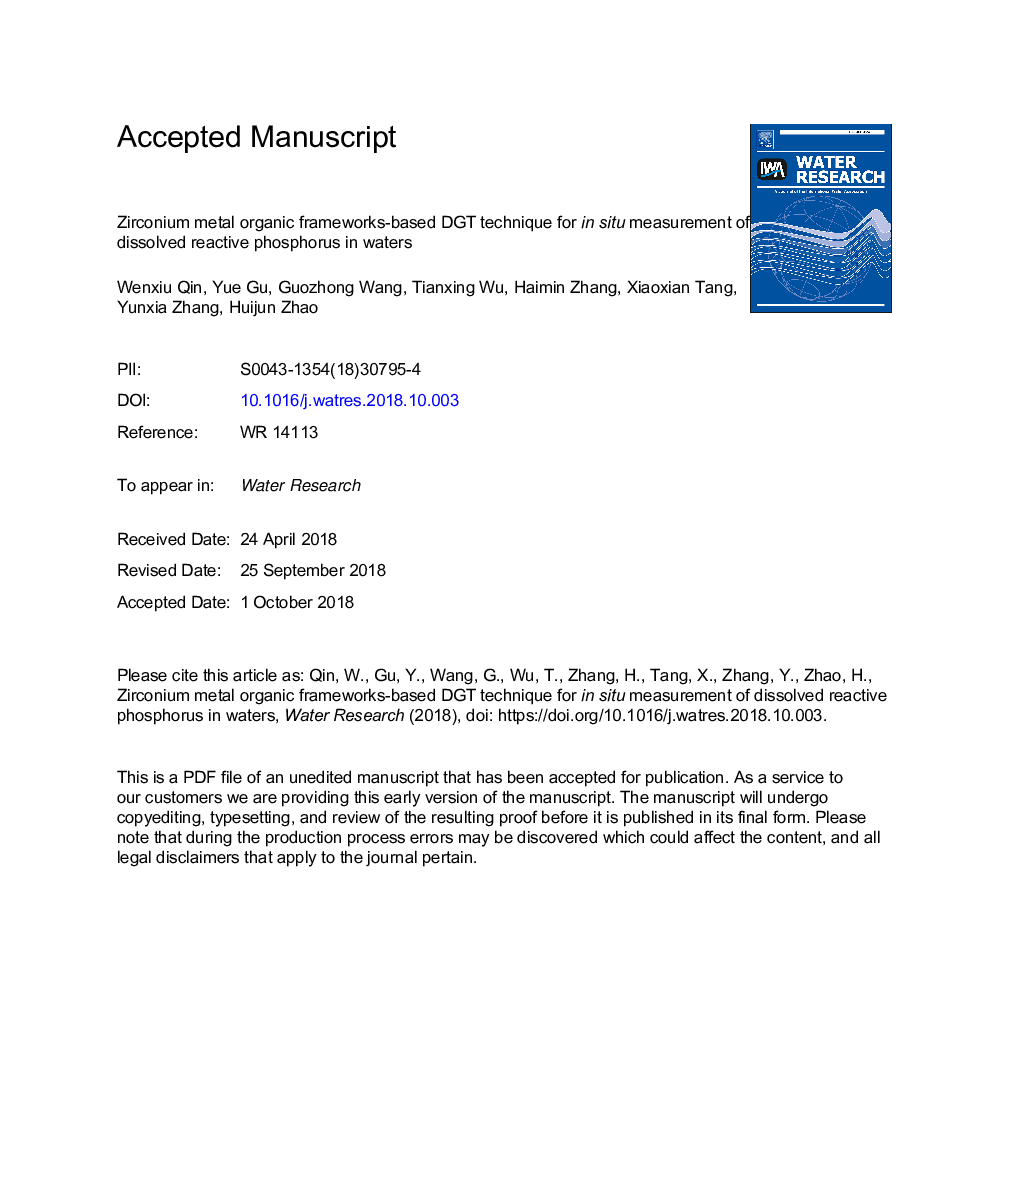 Zirconium metal organic frameworks-based DGT technique for in situ measurement of dissolved reactive phosphorus in waters